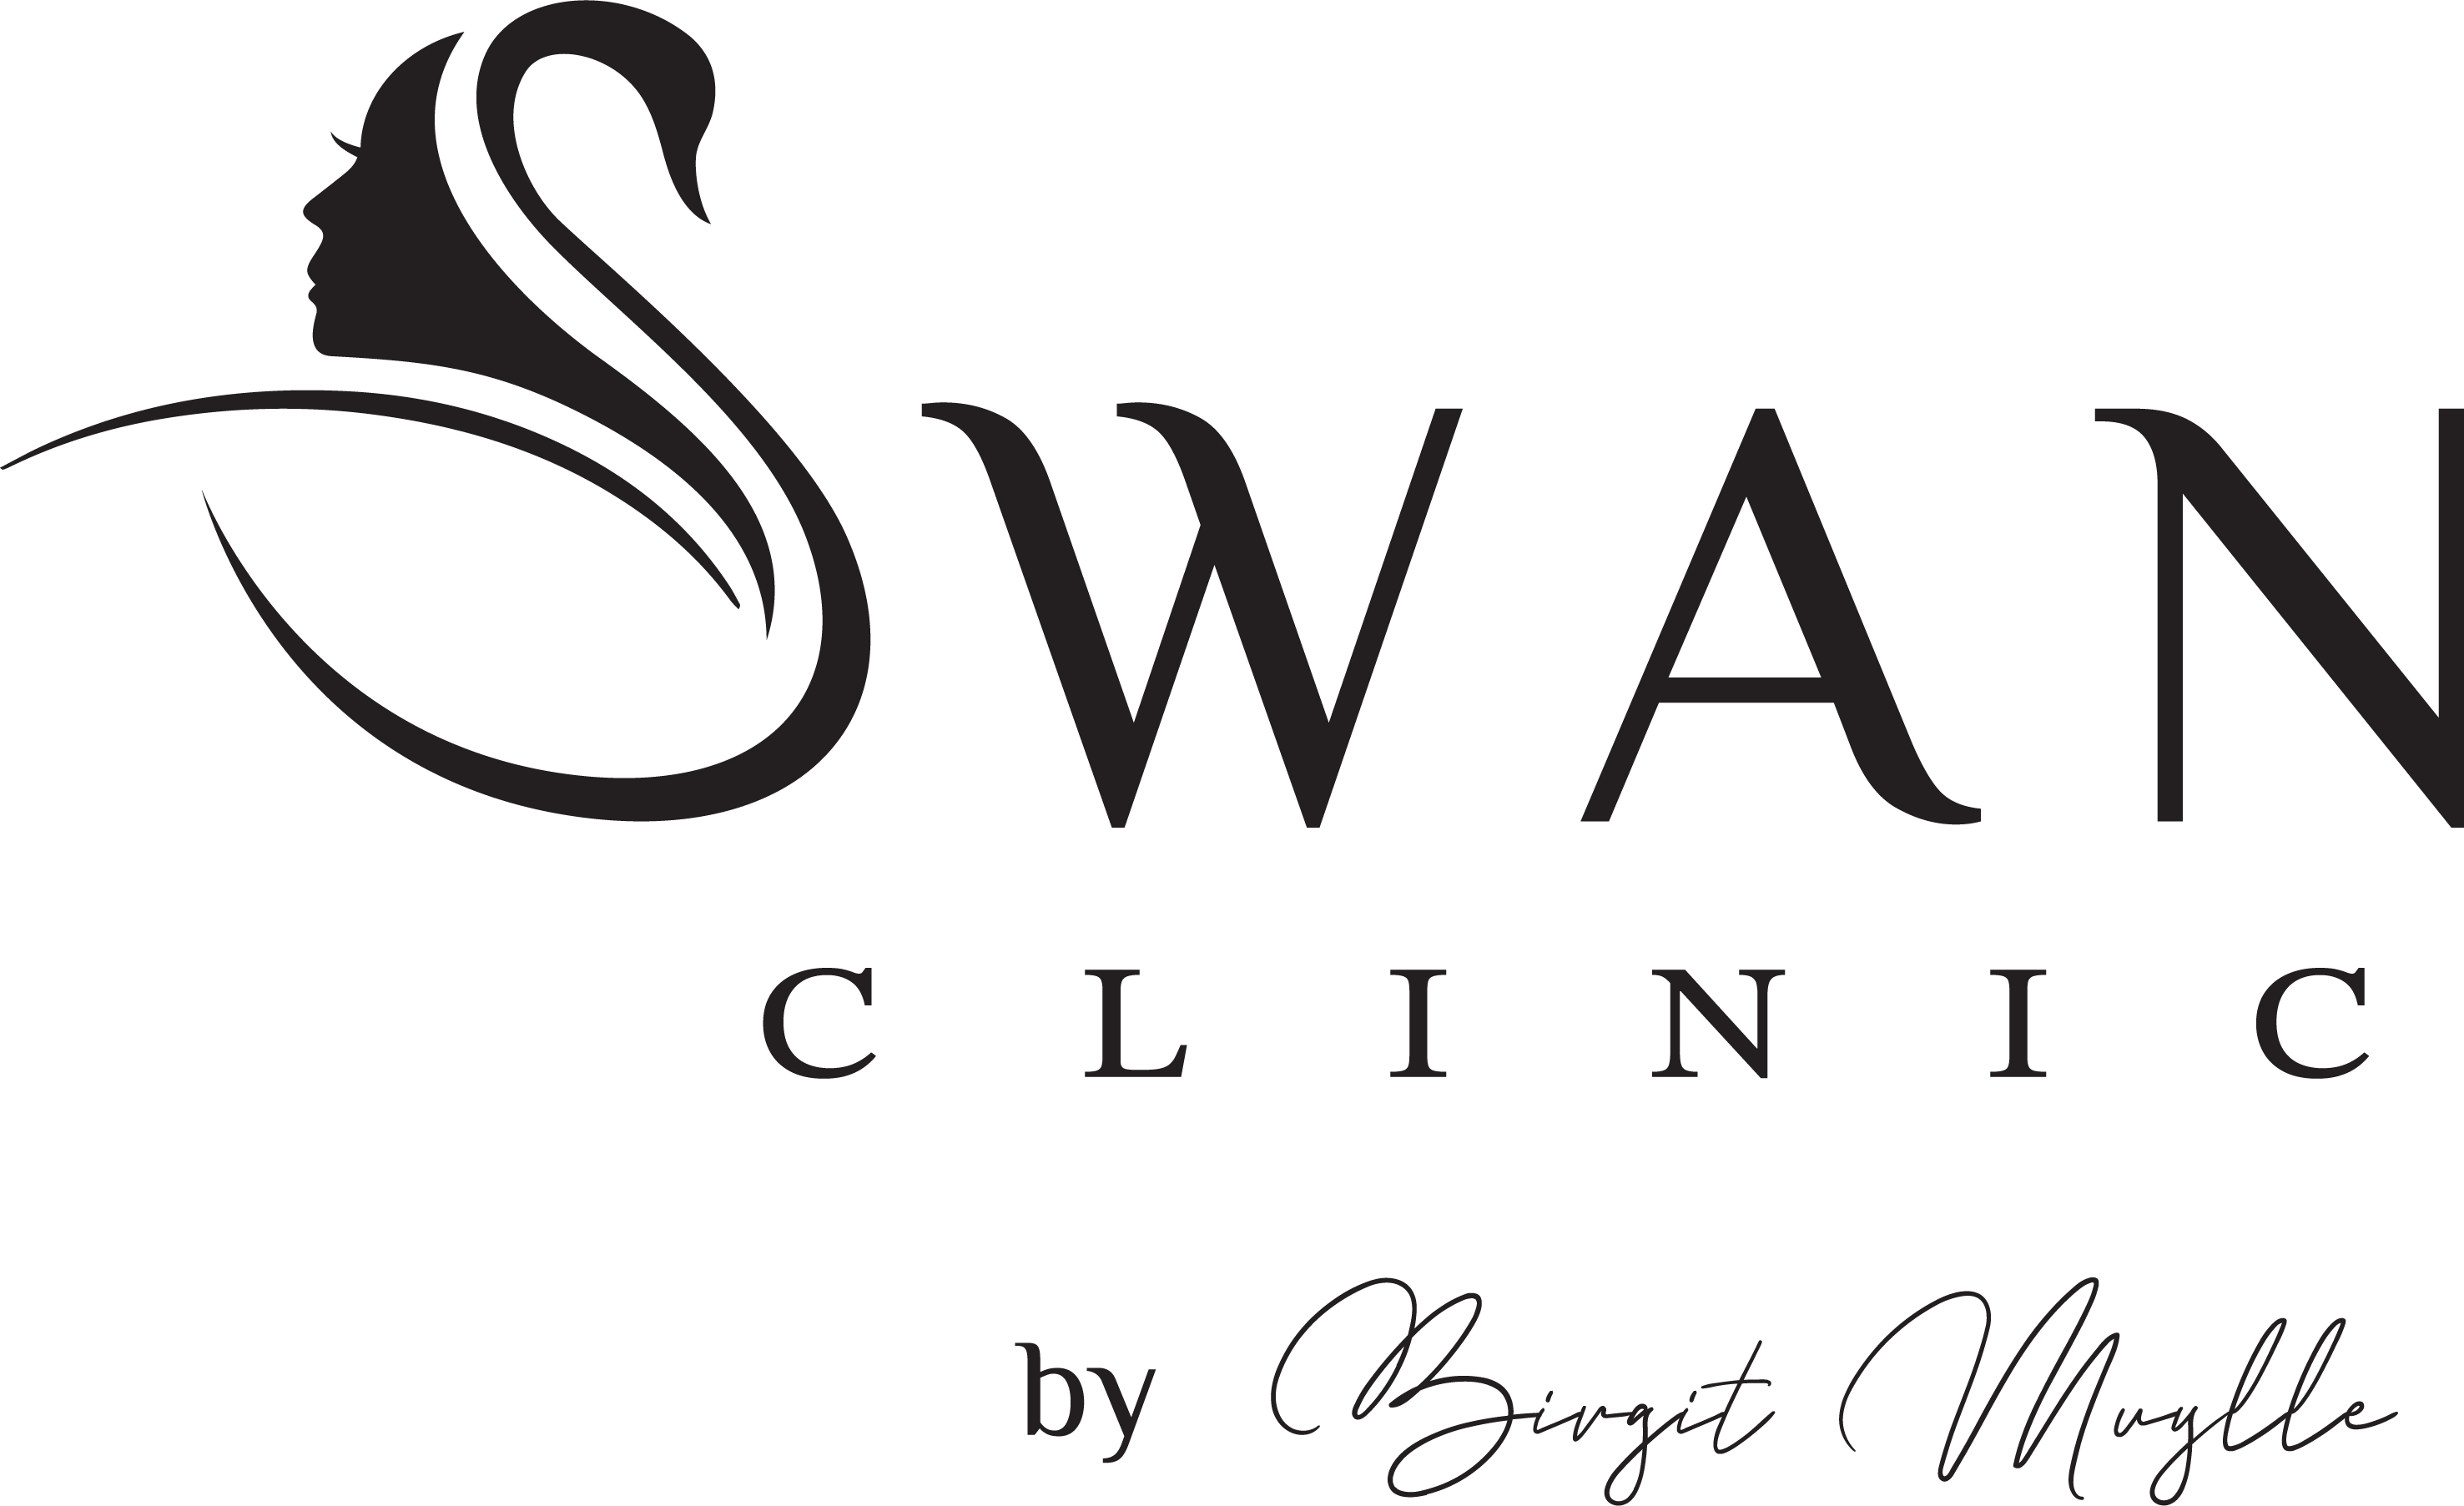 Swan Clinic